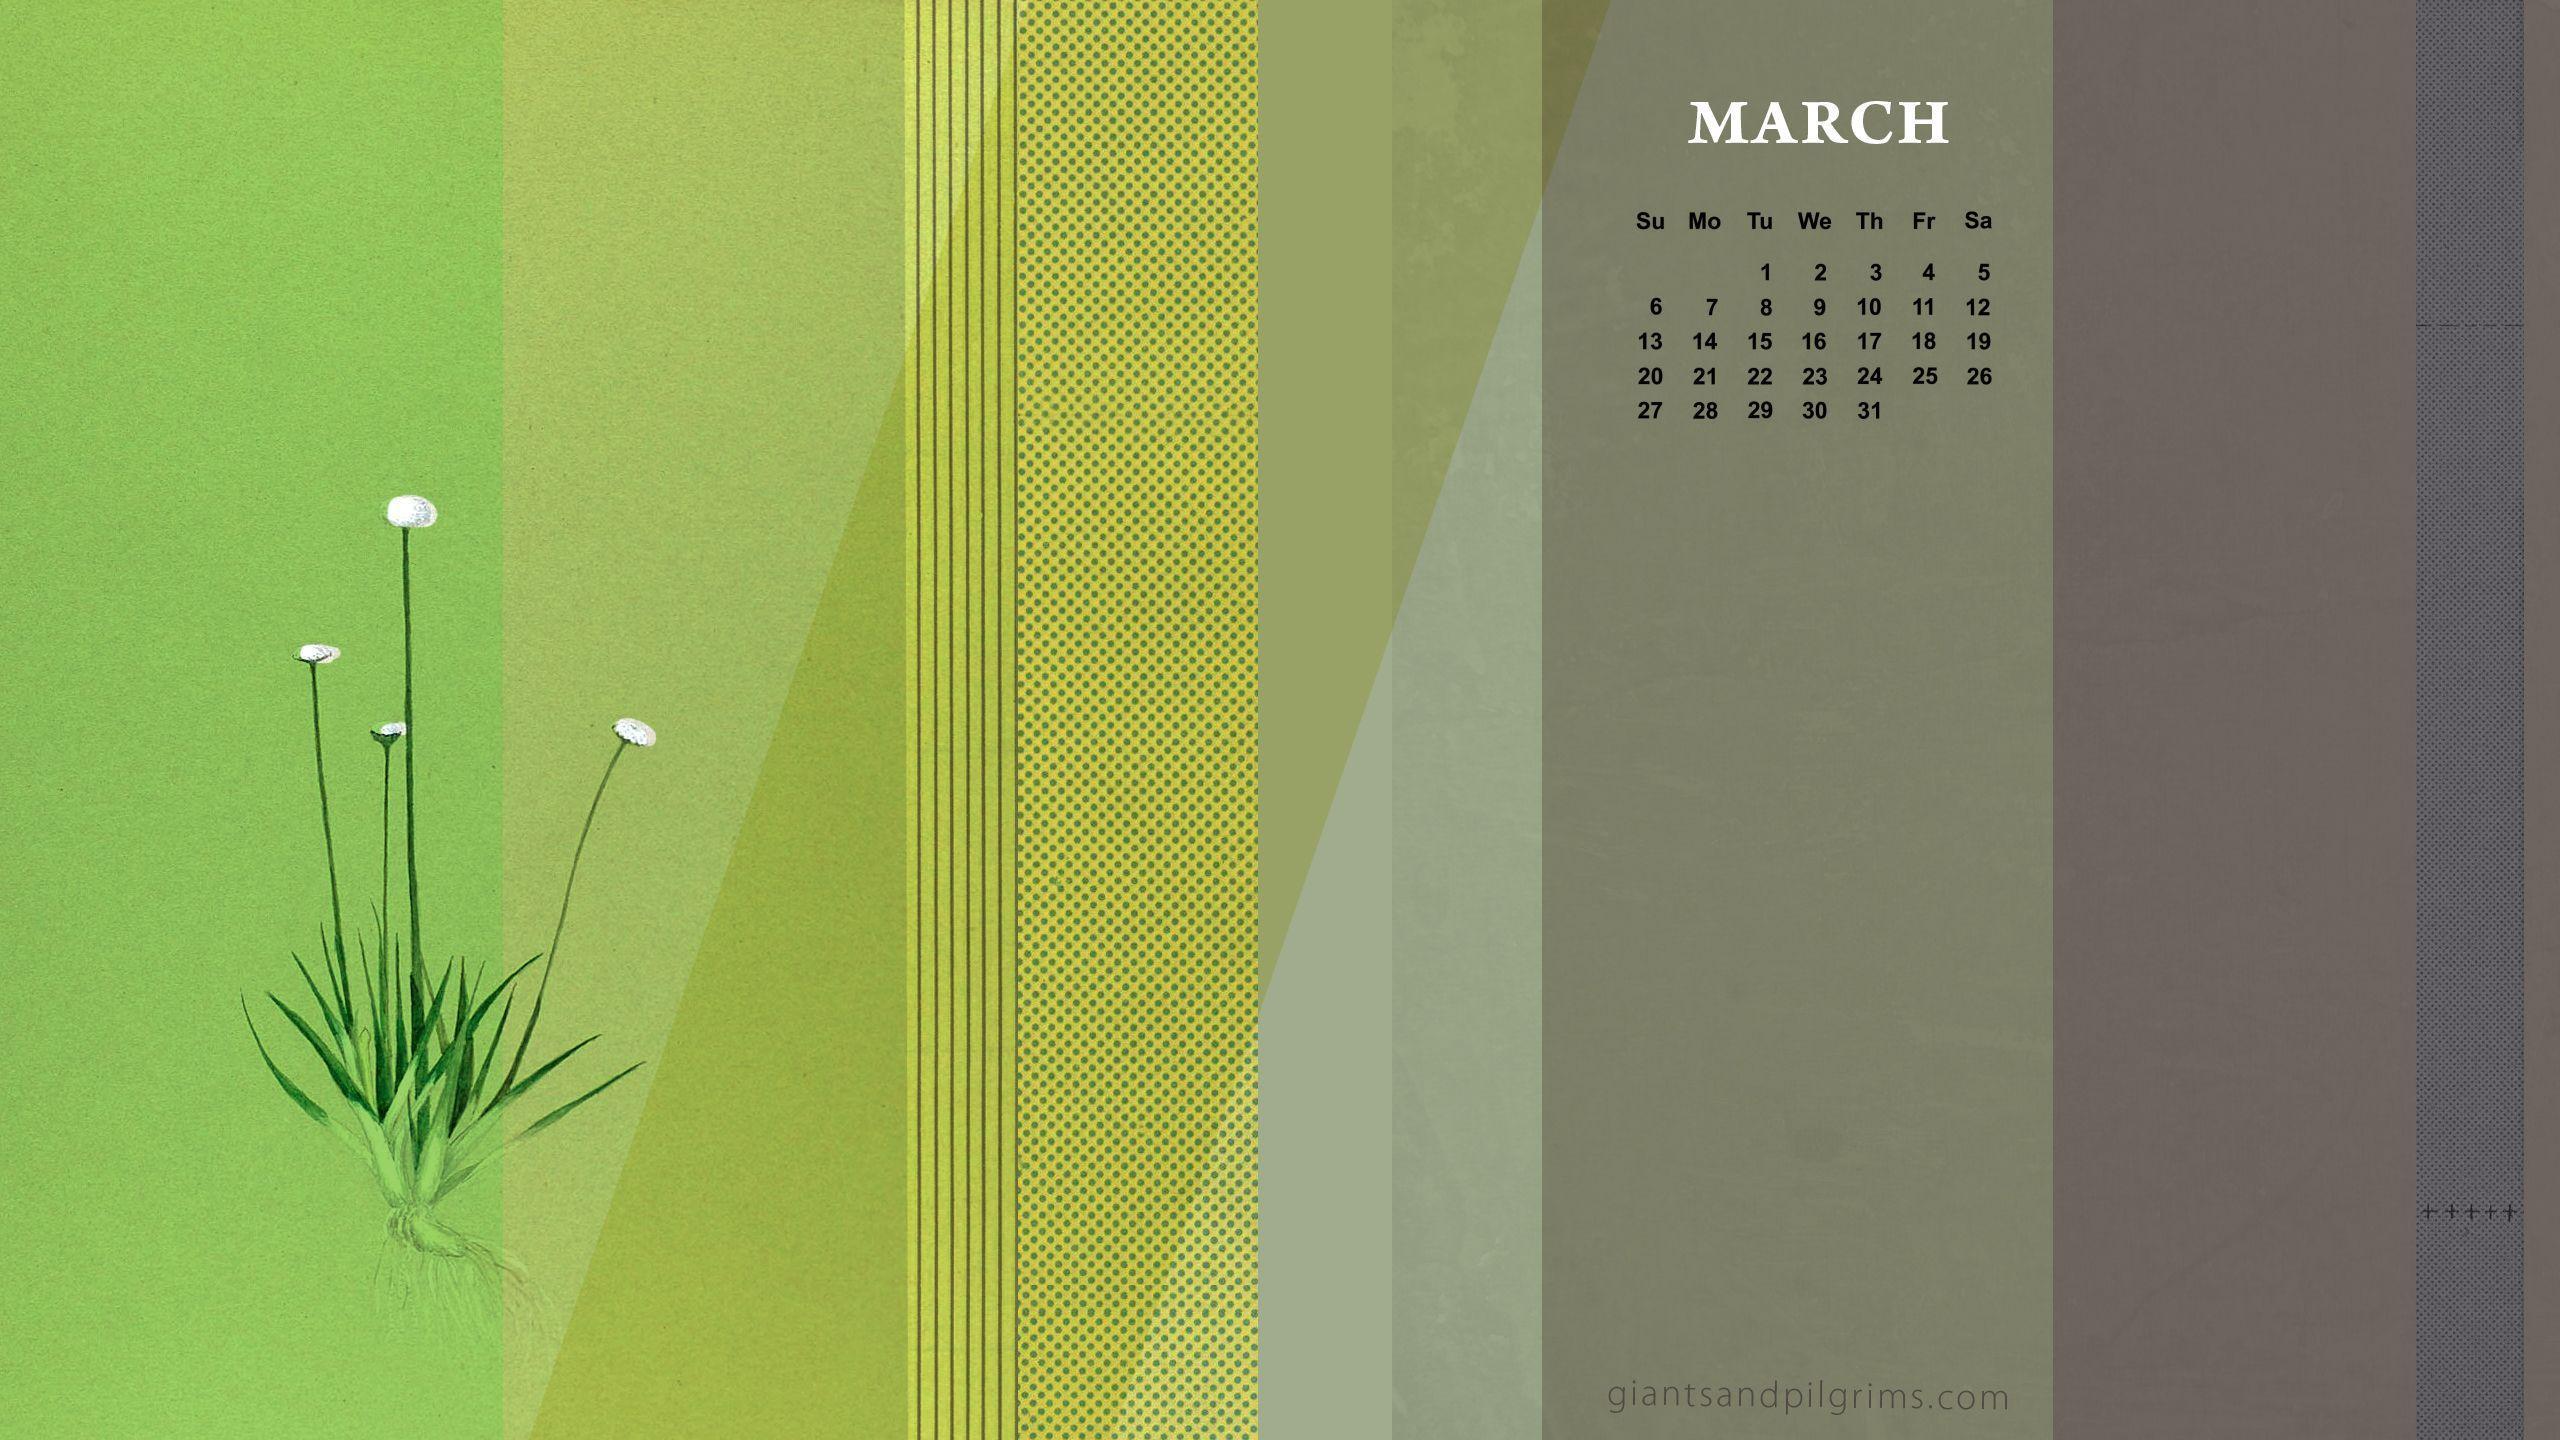 Giants & Pilgrims. March Free Calendar Desktop and iPhone Wallpaper